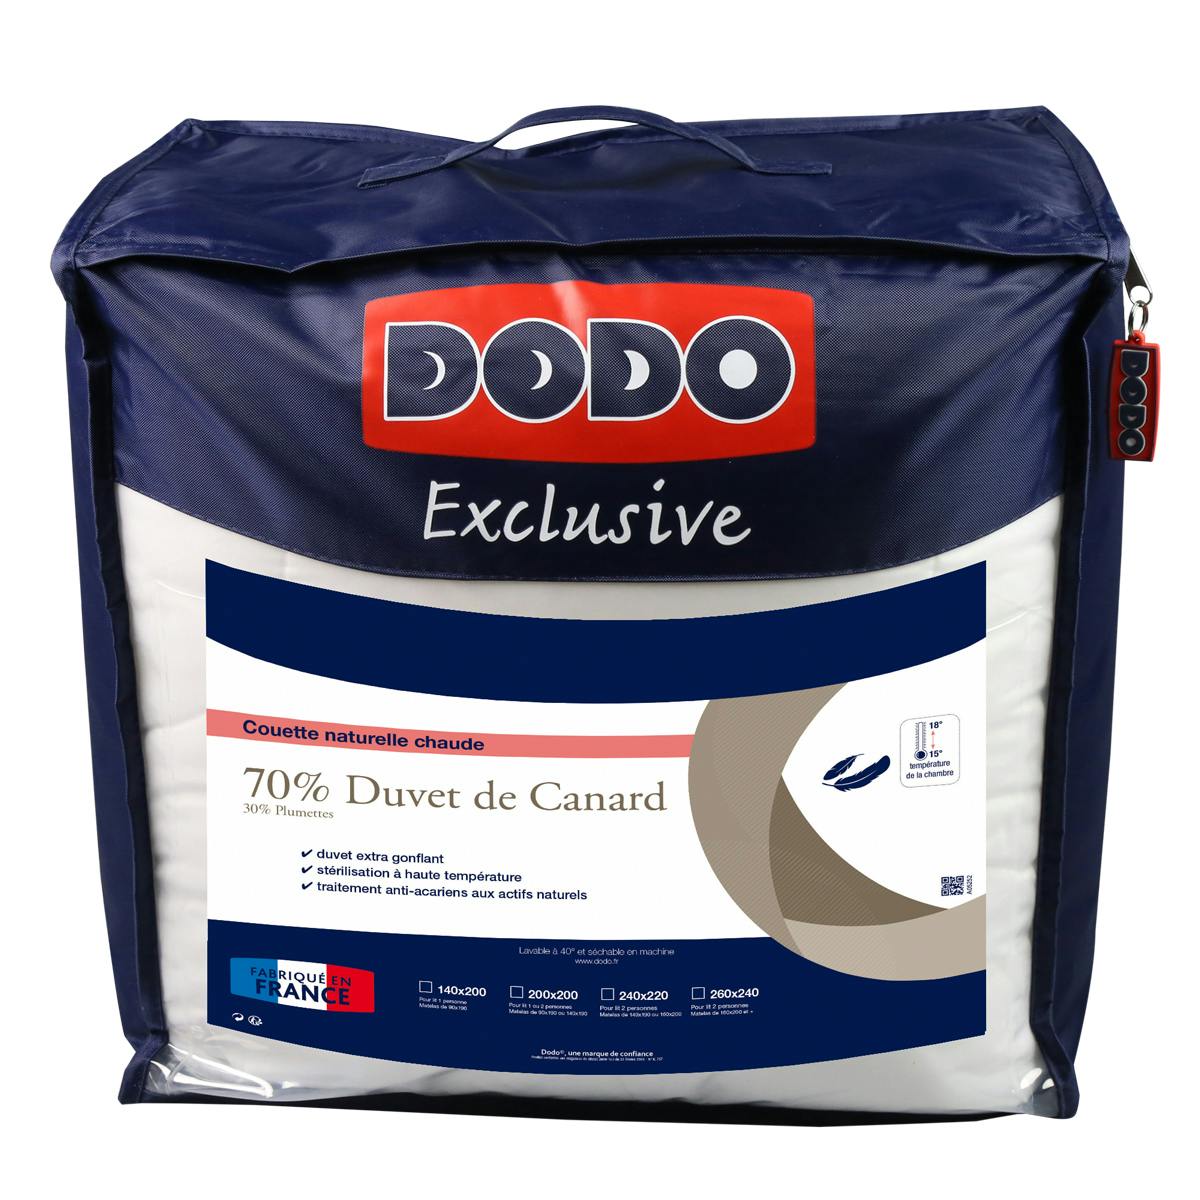 Dodo - couette 140x200 tradition chaude - 50% duvet de canard - Conforama